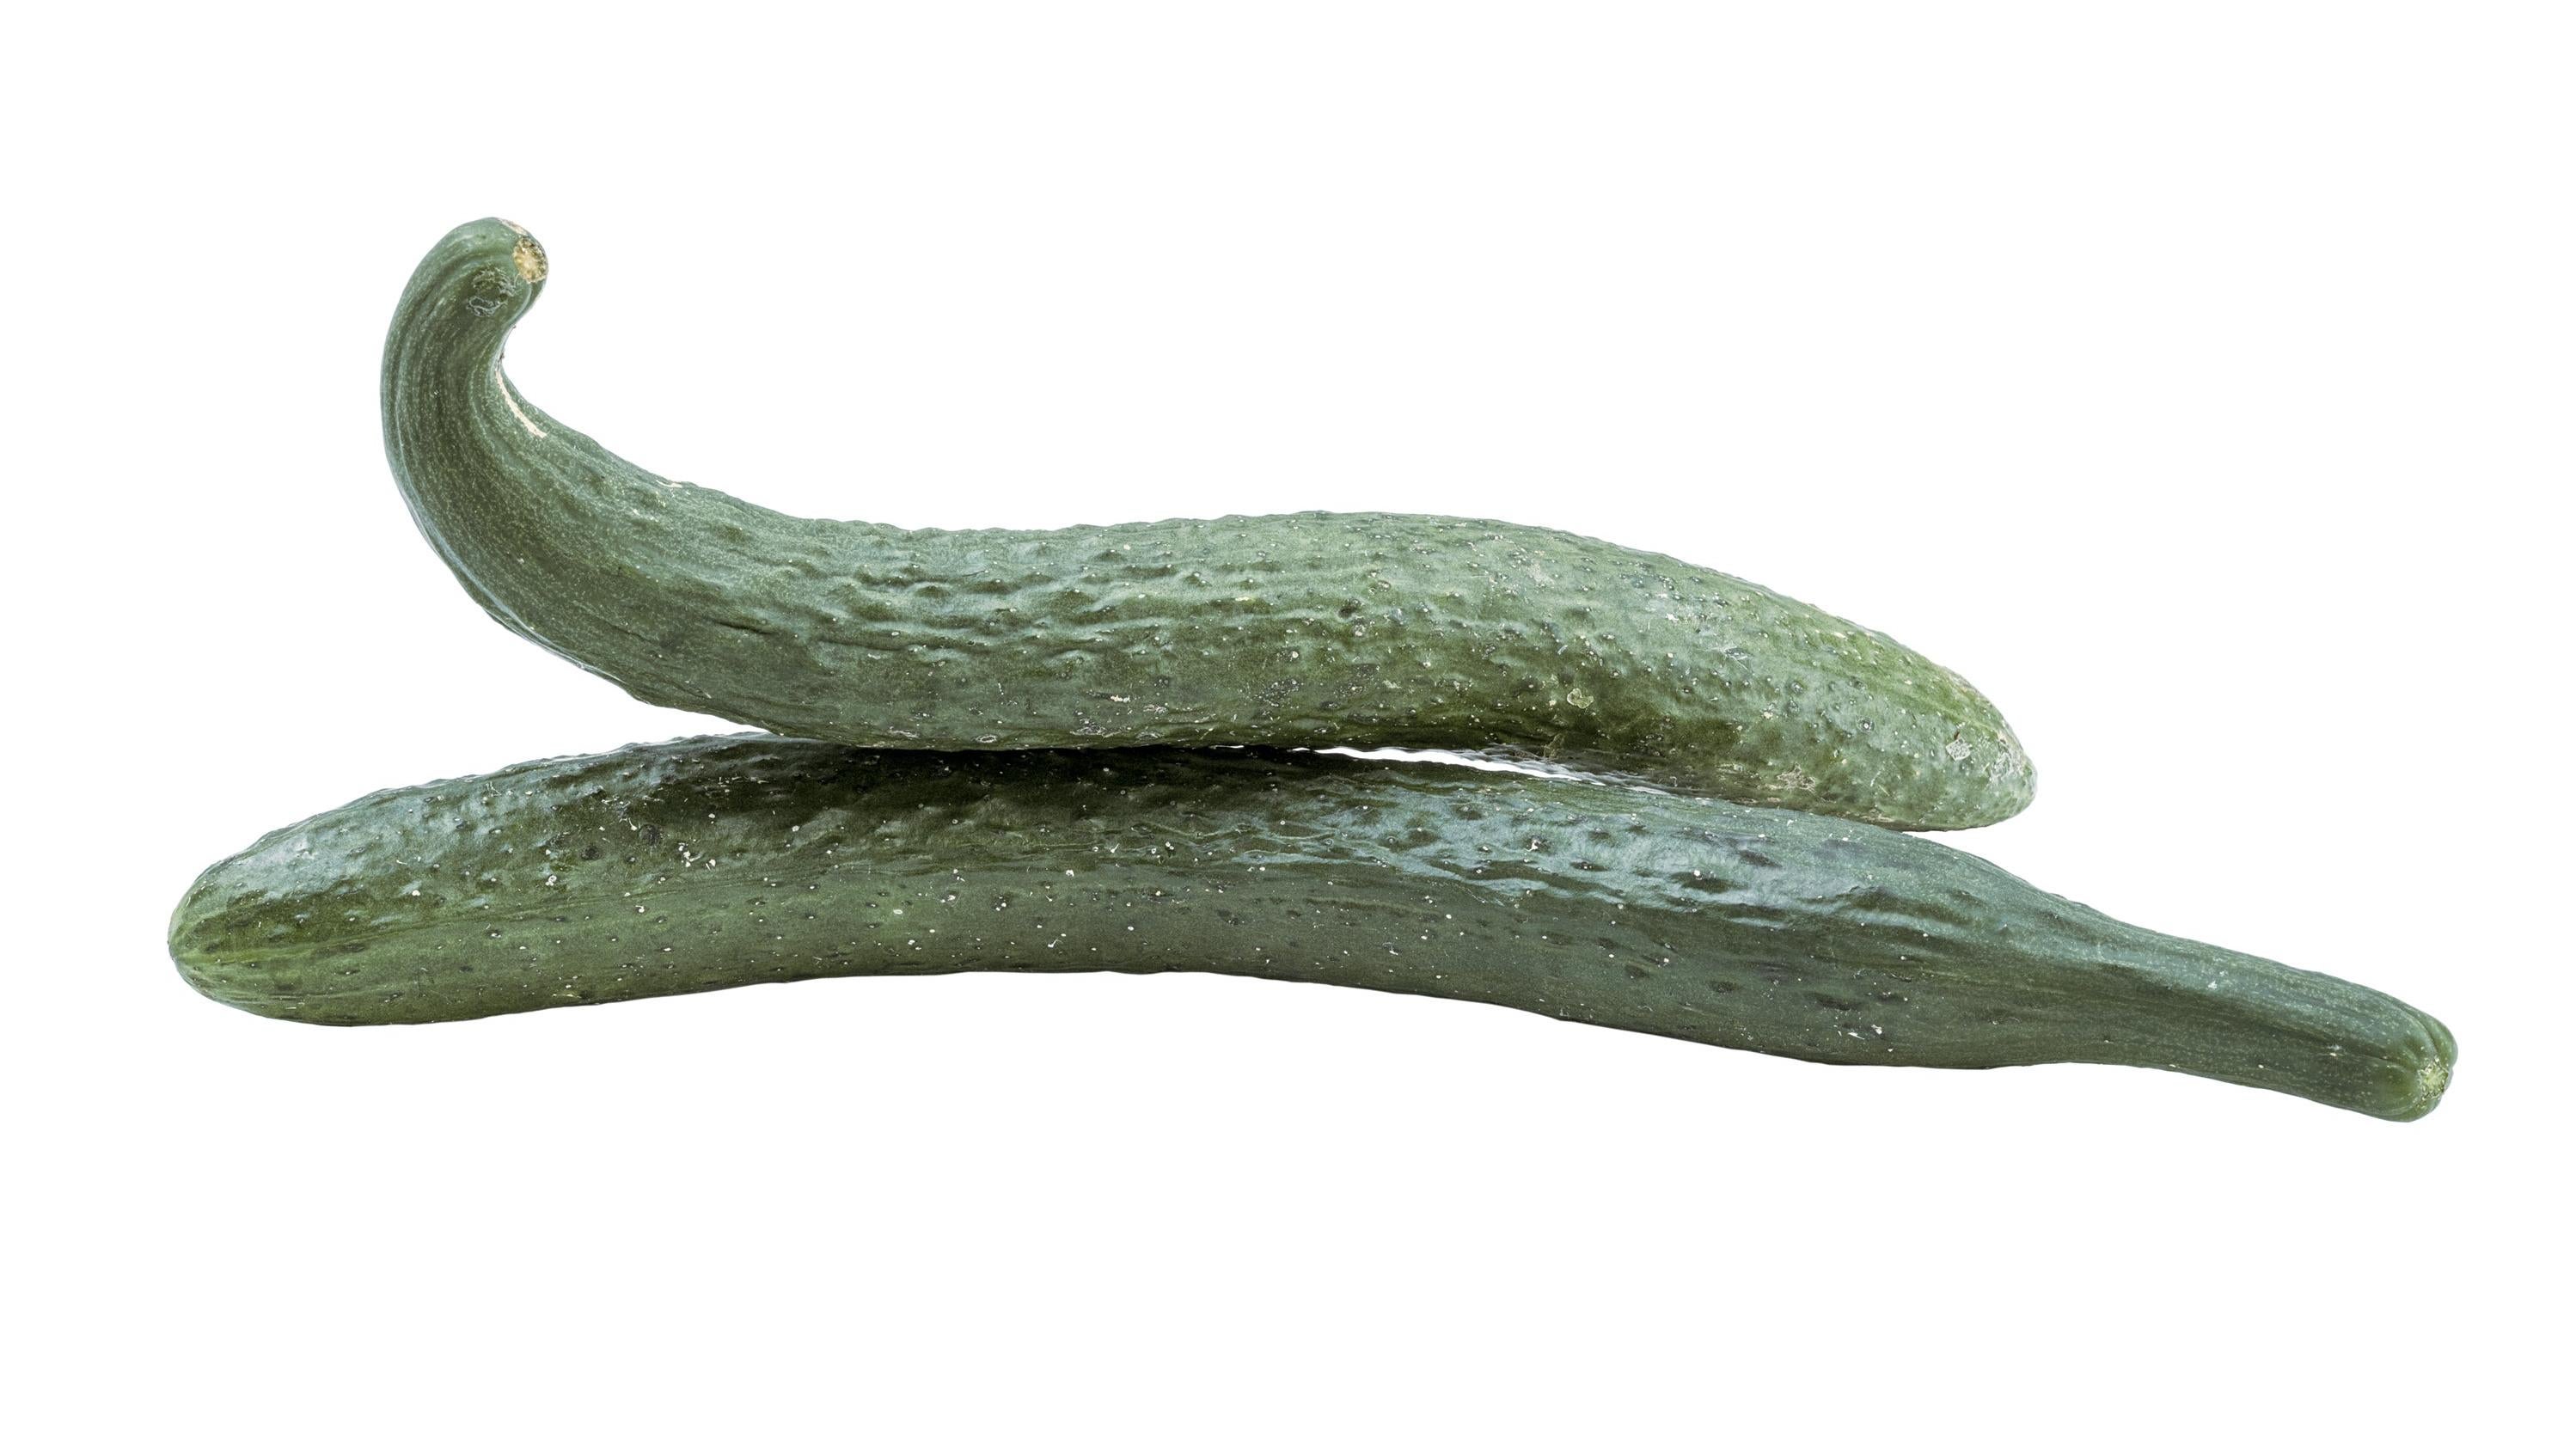 The Aonaga Jibai cucumber. (Image: Courtesy of Hendrick’s Gin)